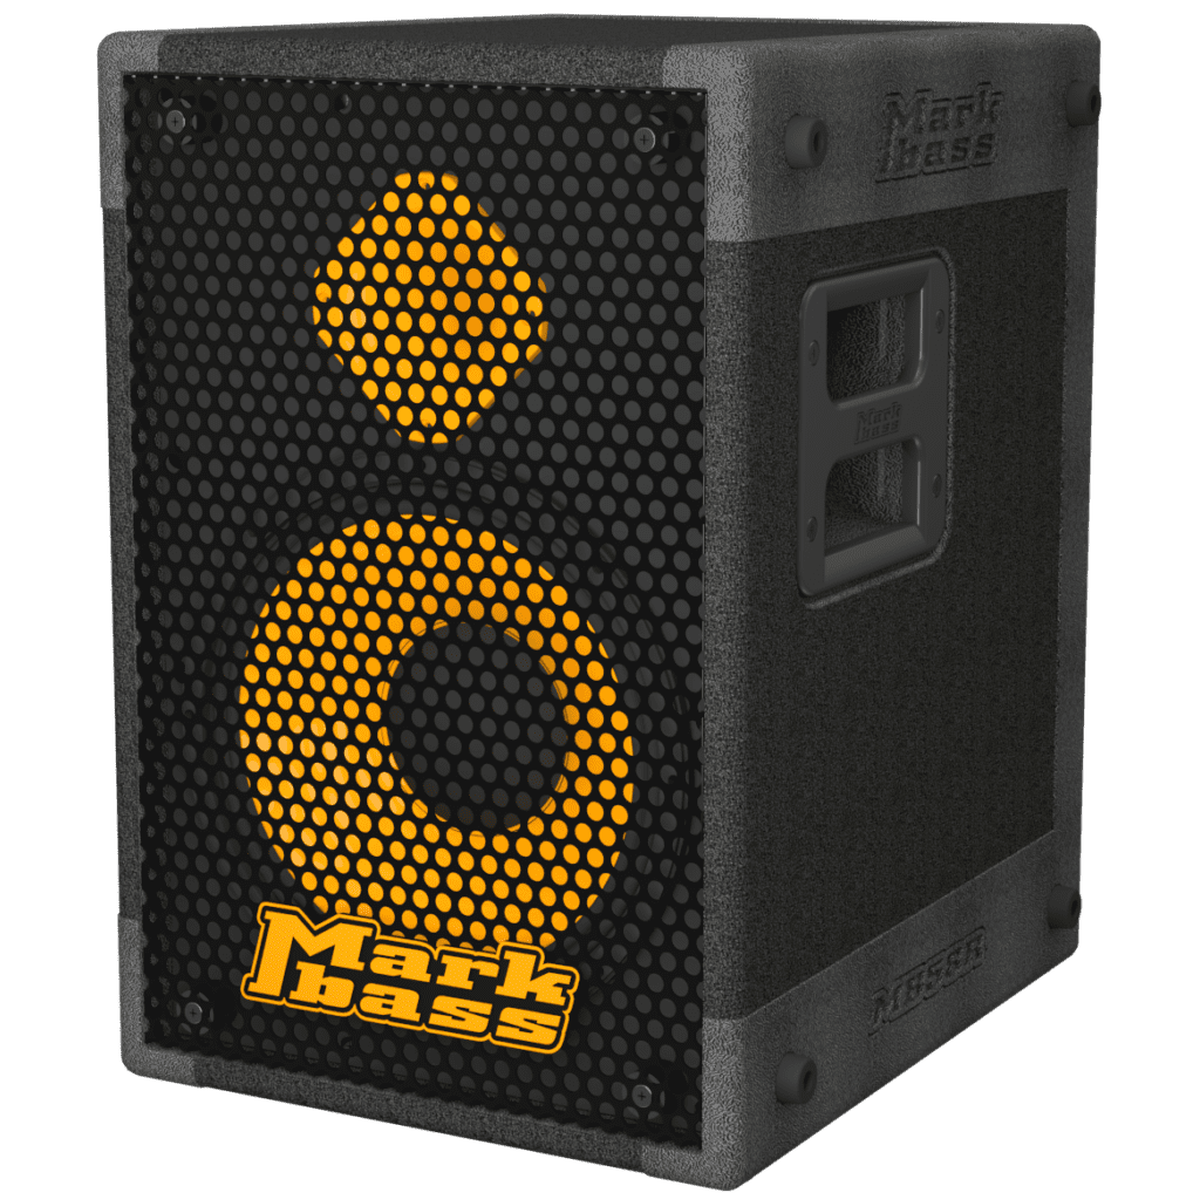 Gallien-Krueger Neo 112-IV 400-Watt 1x12 Bass Speaker Cabinet